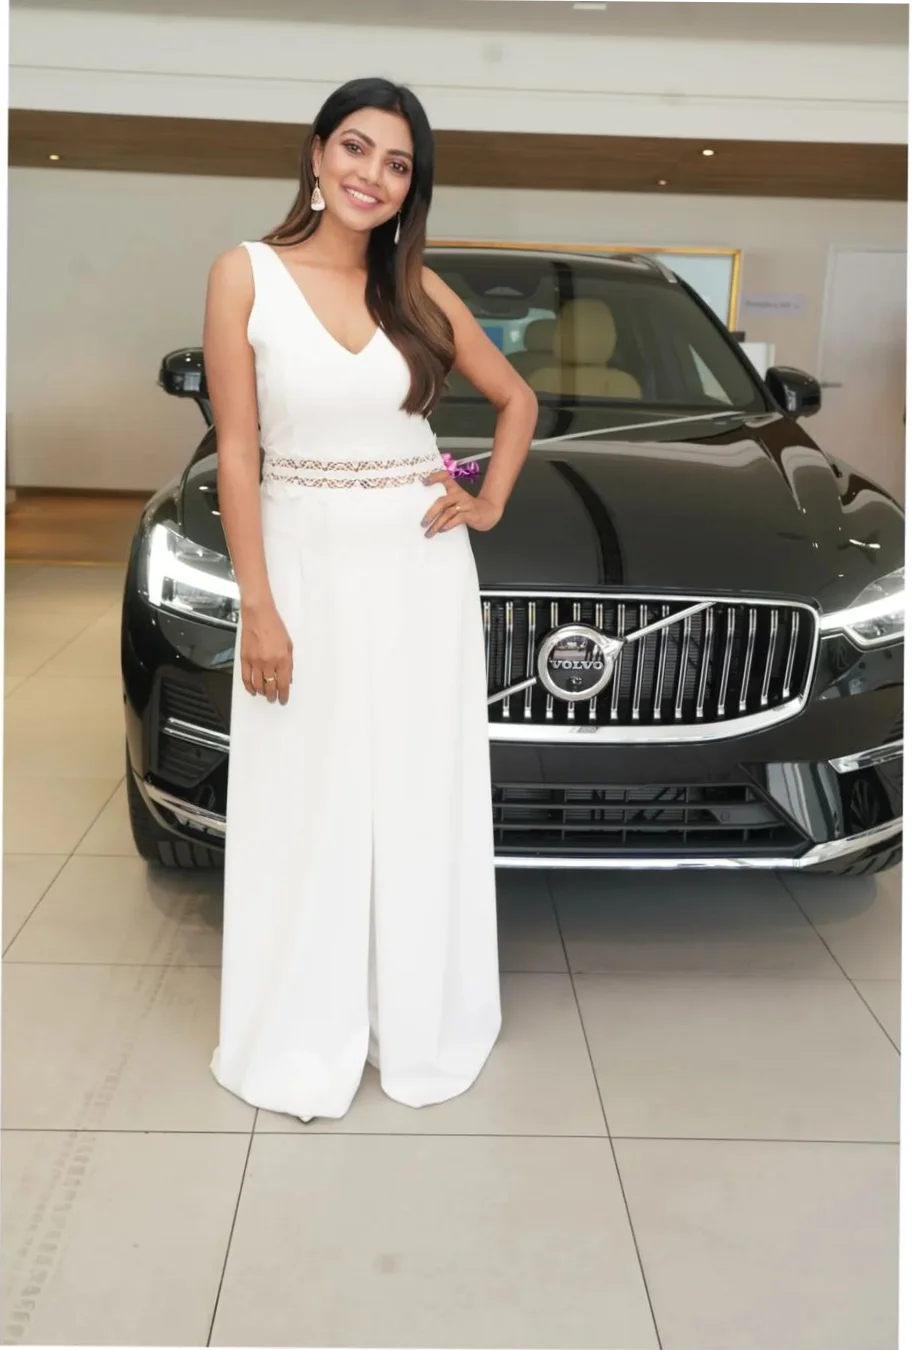 Lahari Shari buys New Car 